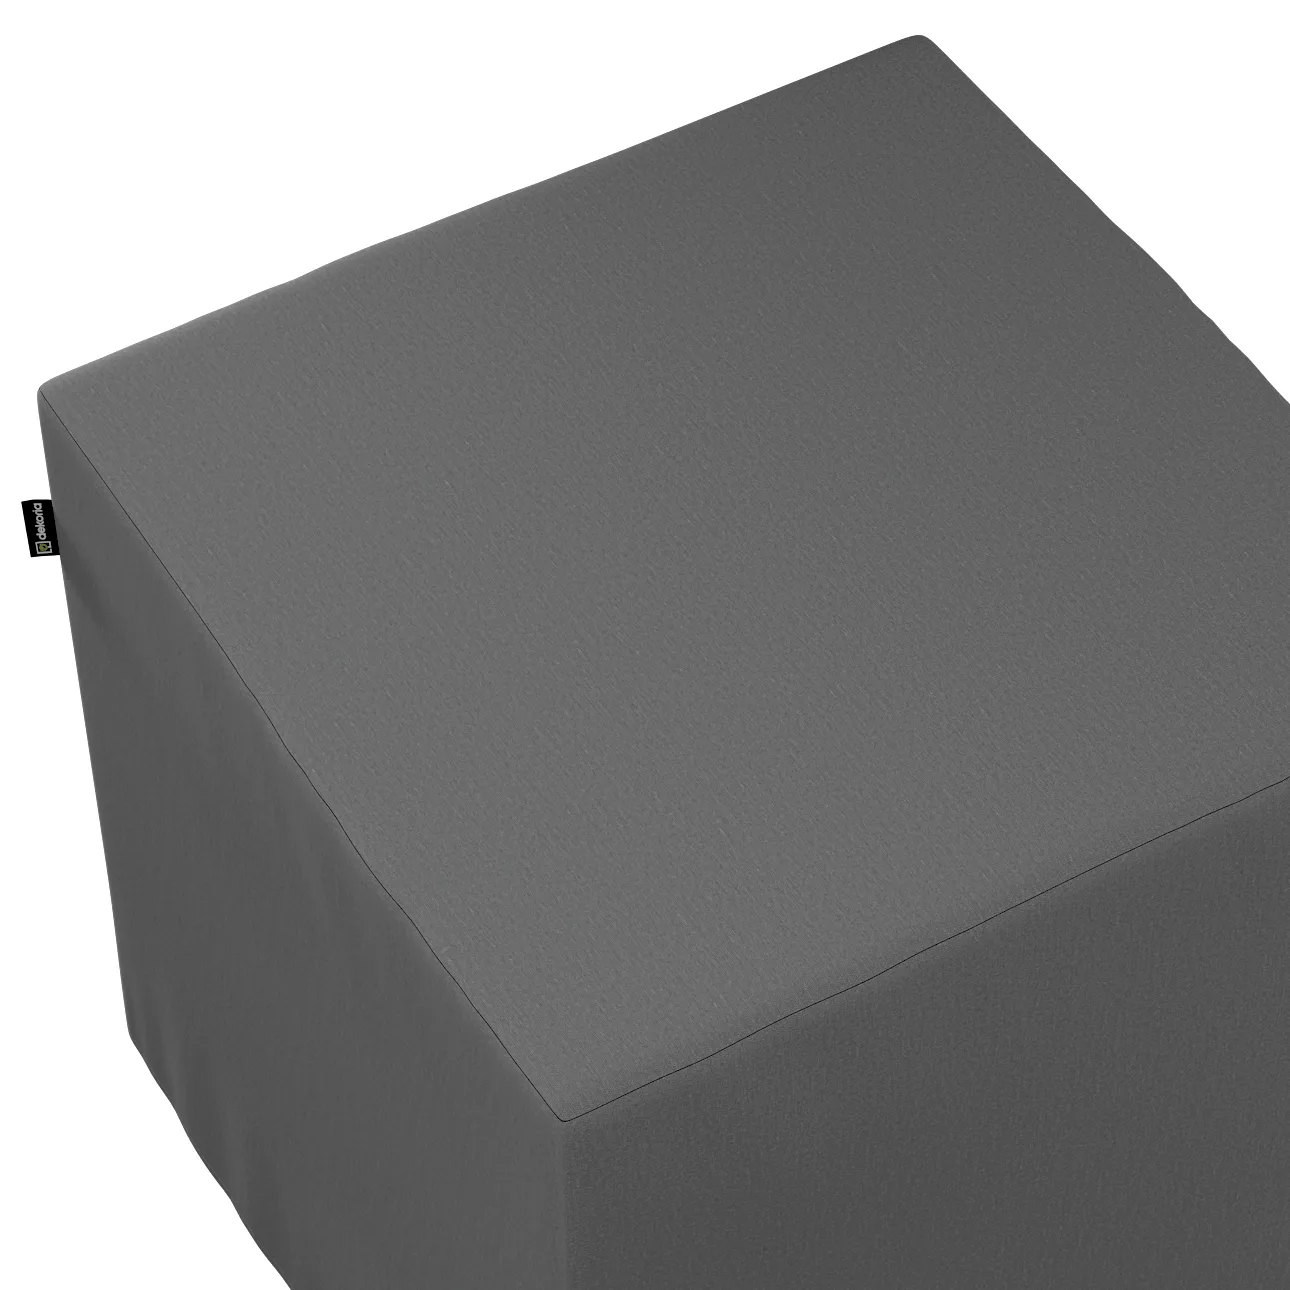 Bezug für Sitzwürfel, grau, Bezug für Sitzwürfel 40 x 40 x 40 cm, Quadro (1 günstig online kaufen